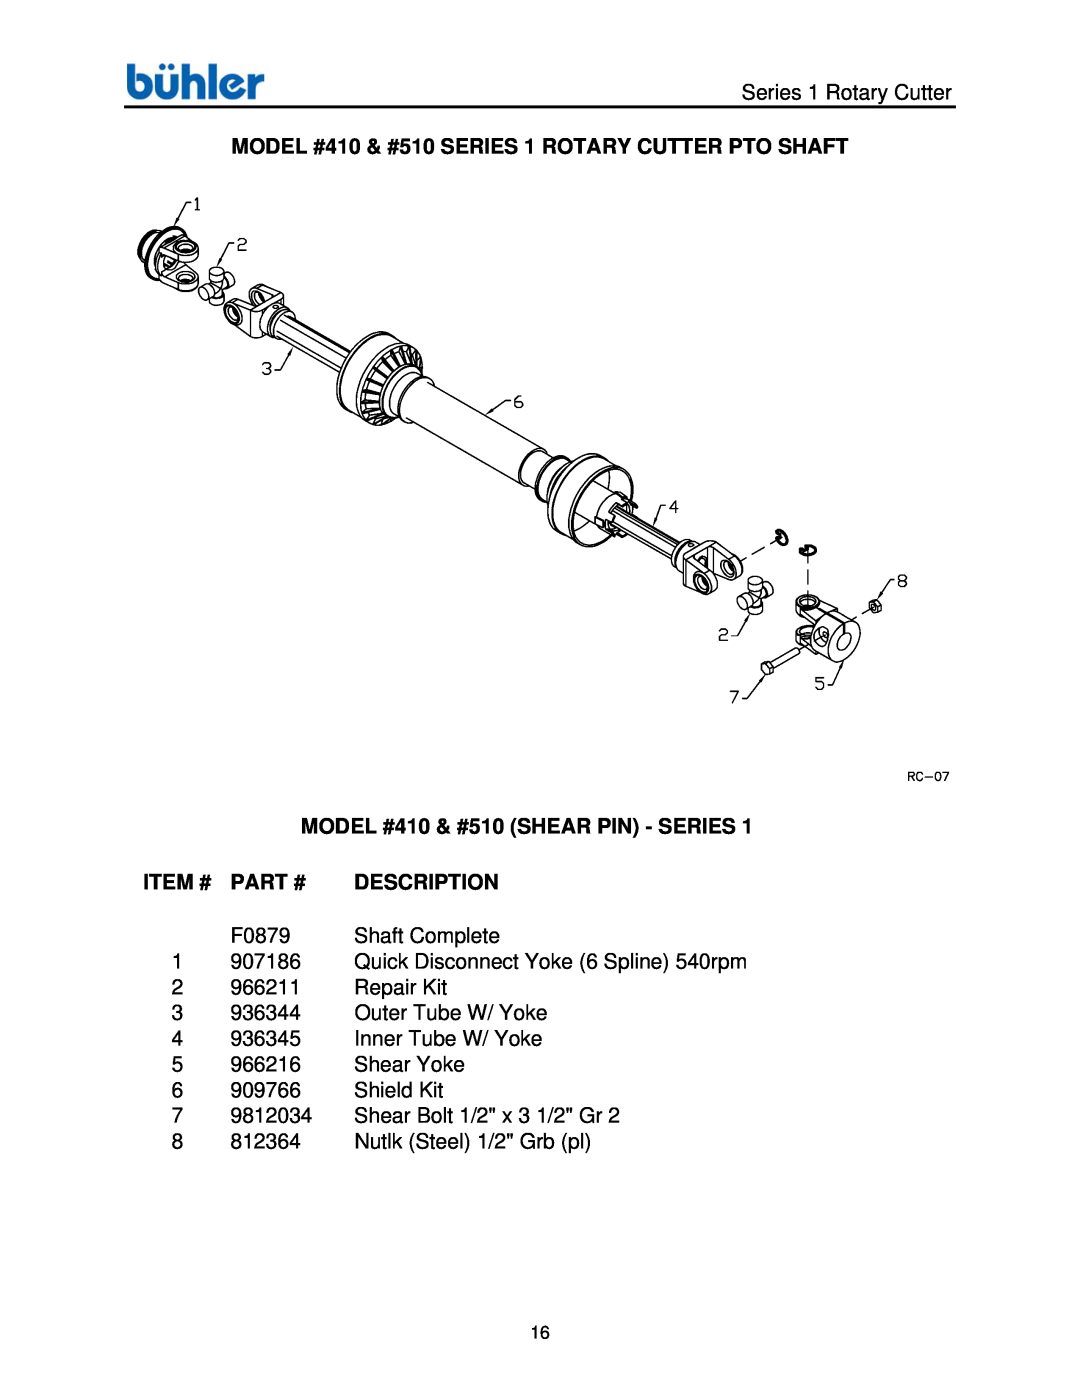 Buhler FK372 manual MODEL #410 & #510 SHEAR PIN - SERIES, Item #, Part #, Description 